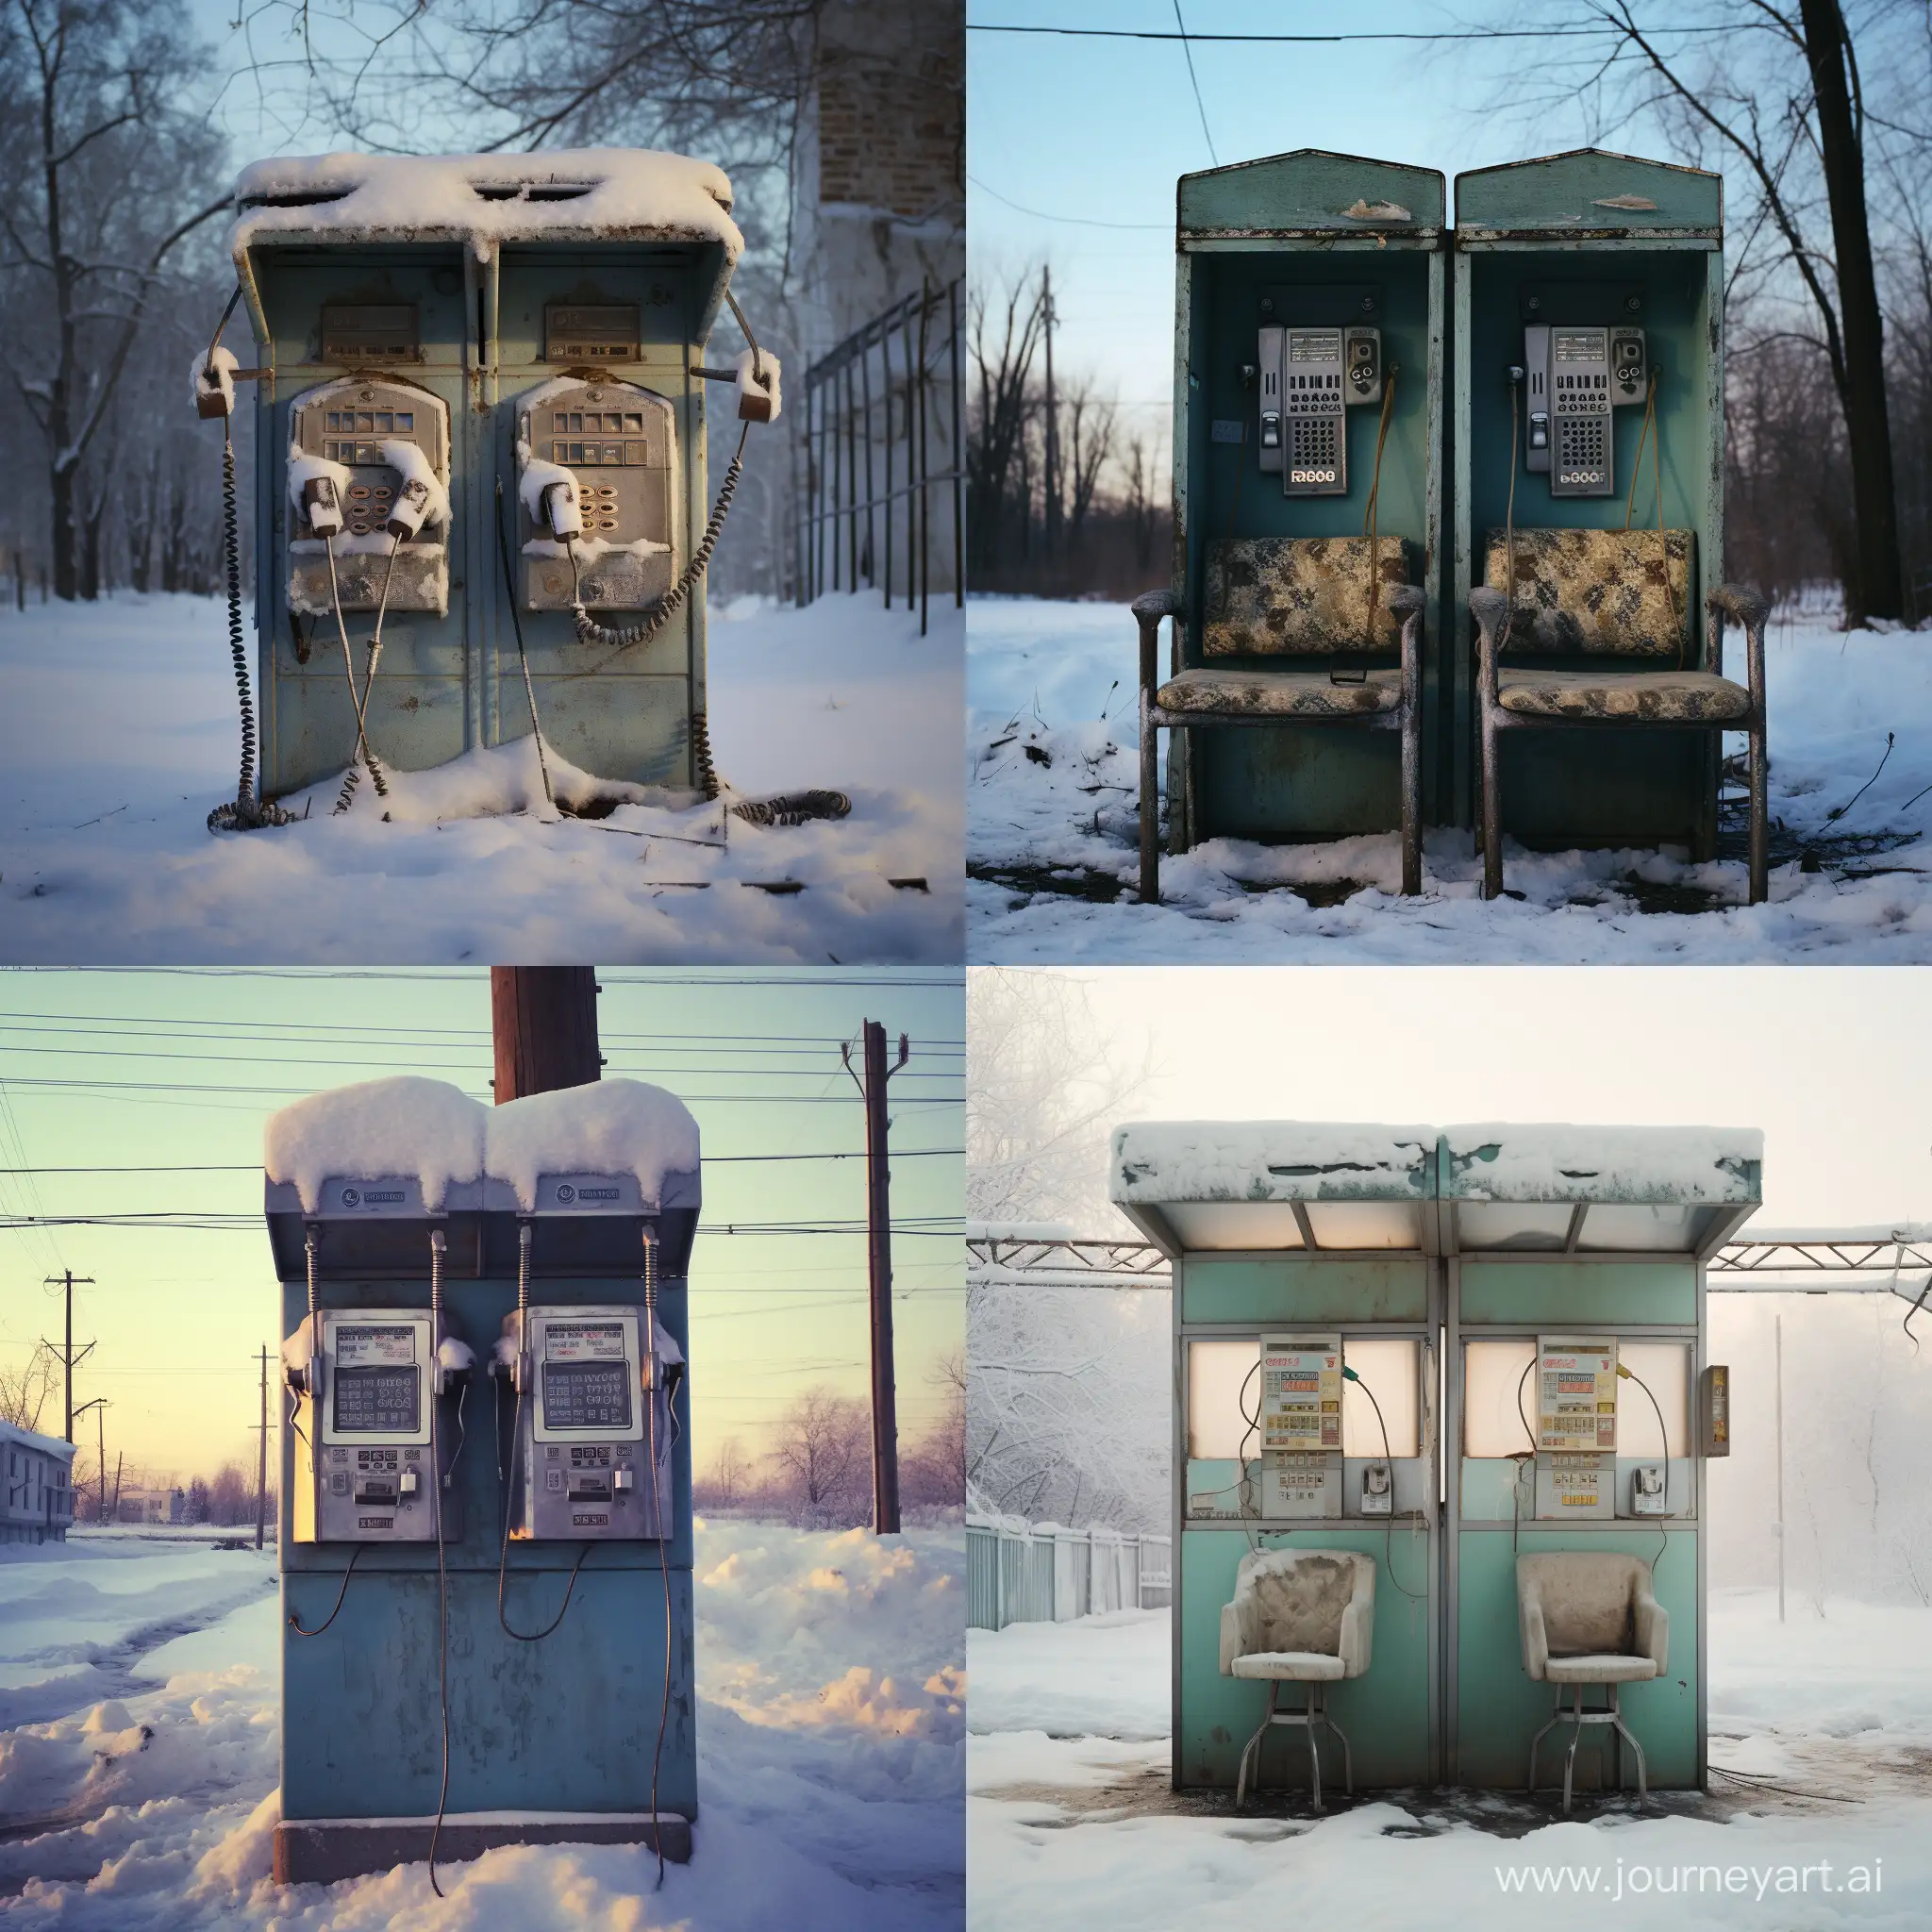 Vintage-Soviet-Payphone-Booth-in-Winter-Nostalgic-11-Art-Depicting-Two-Kopecks-Era